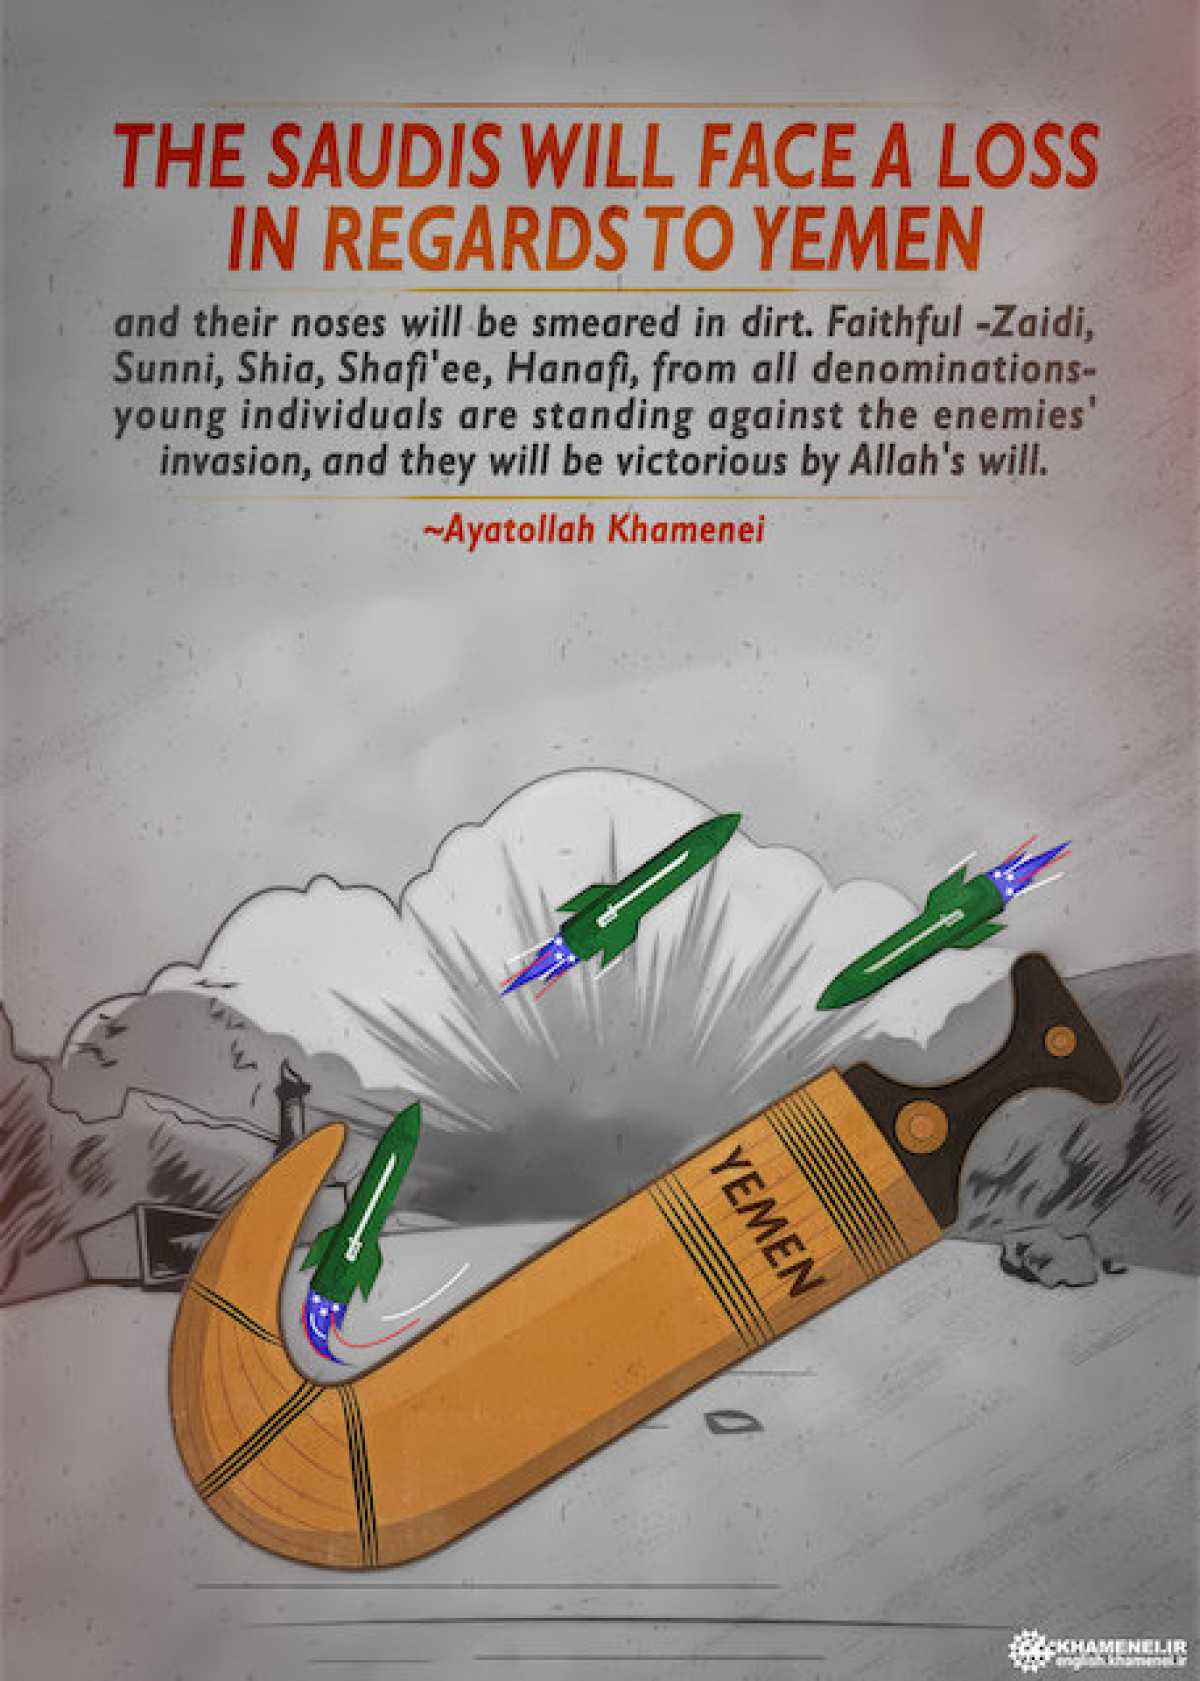 The Saudis will face a loss in regards to Yemen: Imam Khamenei